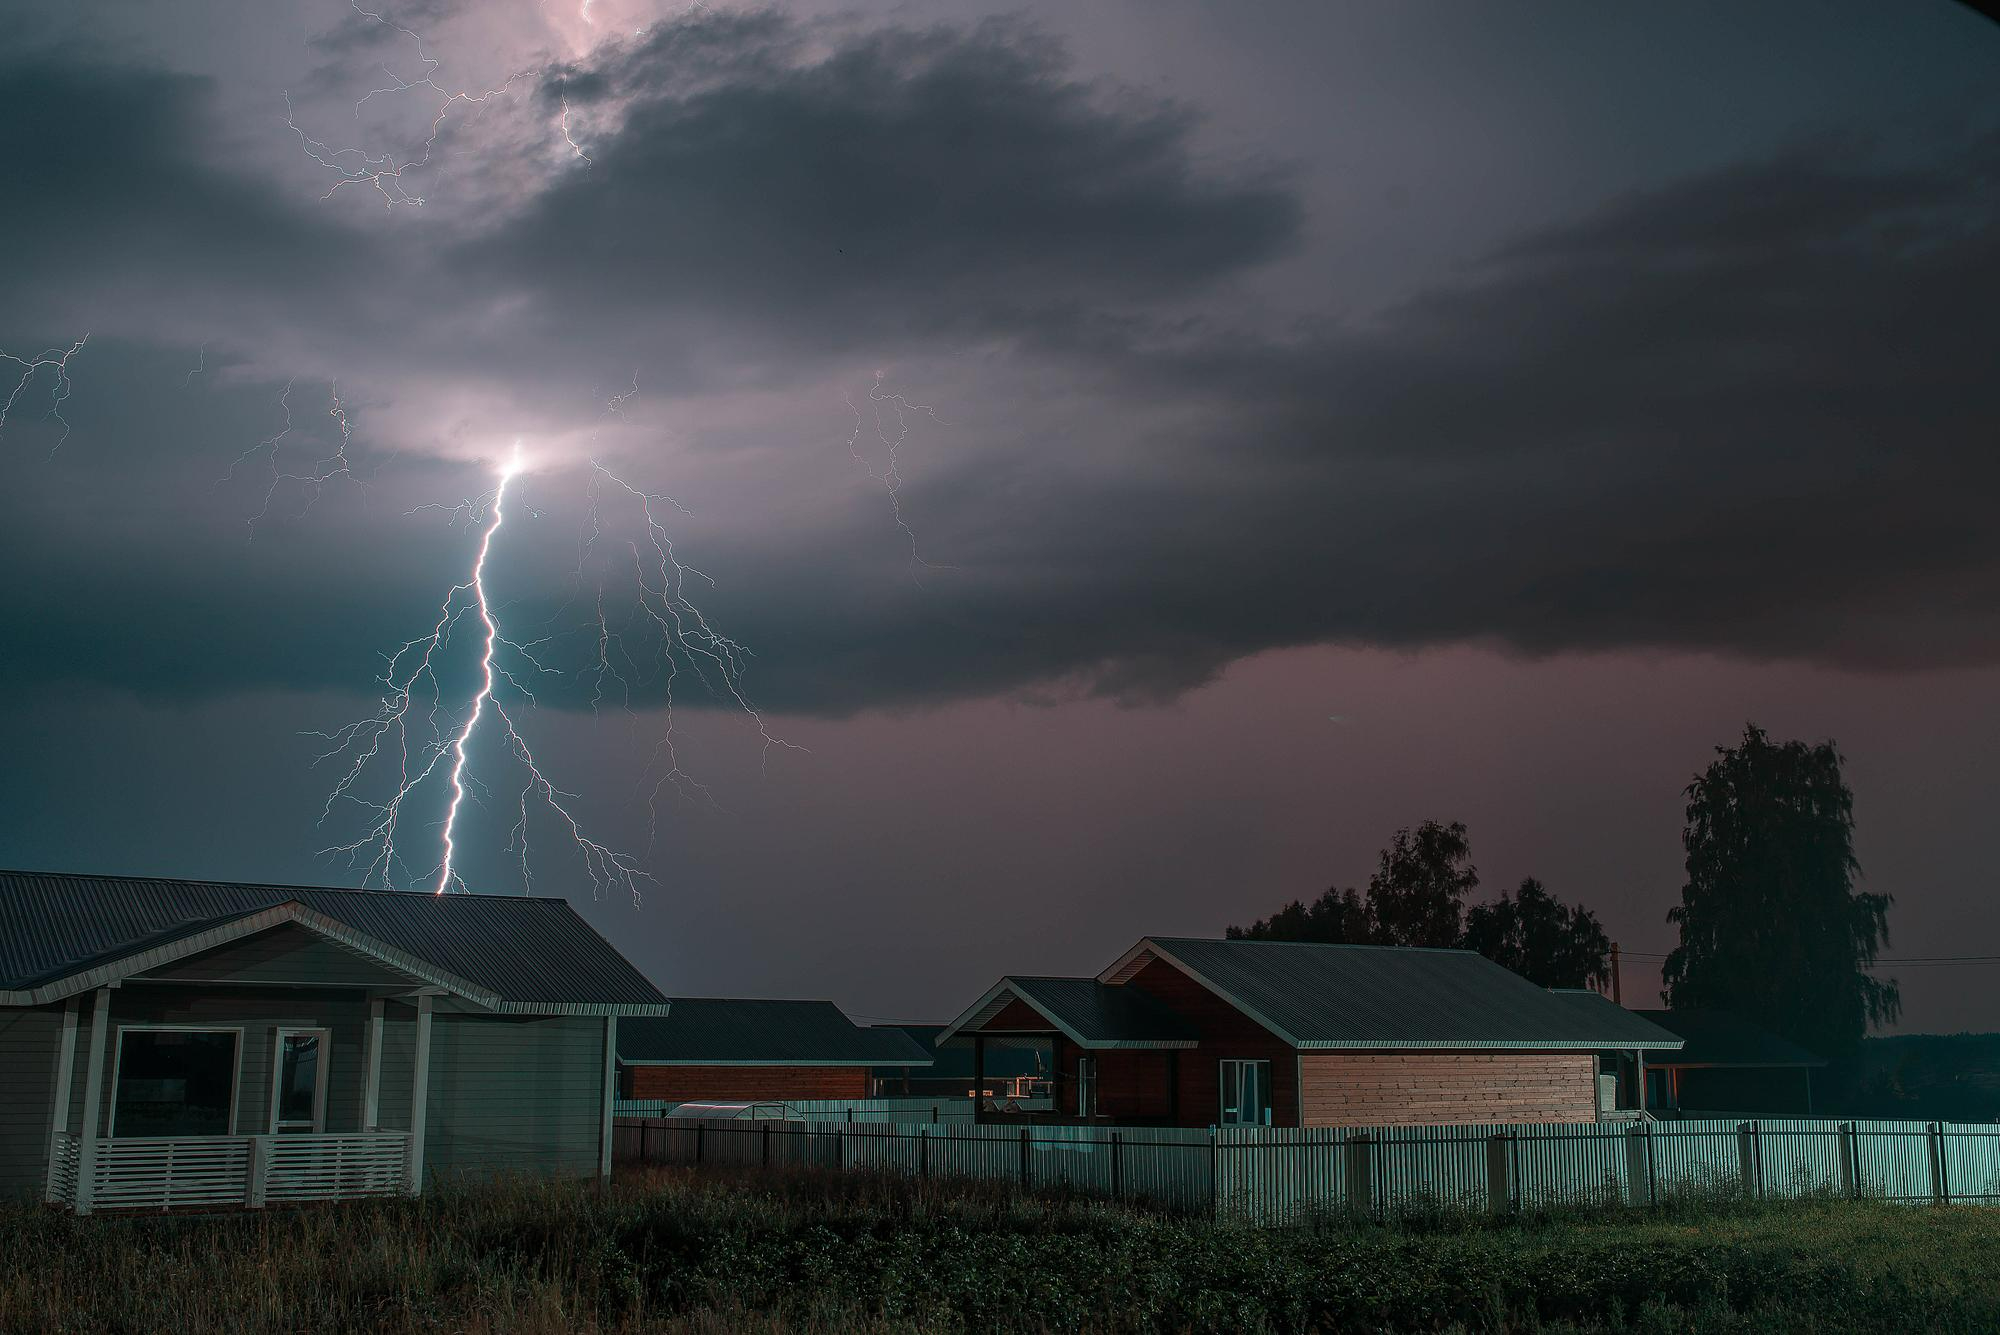 lightning strike above home during storm